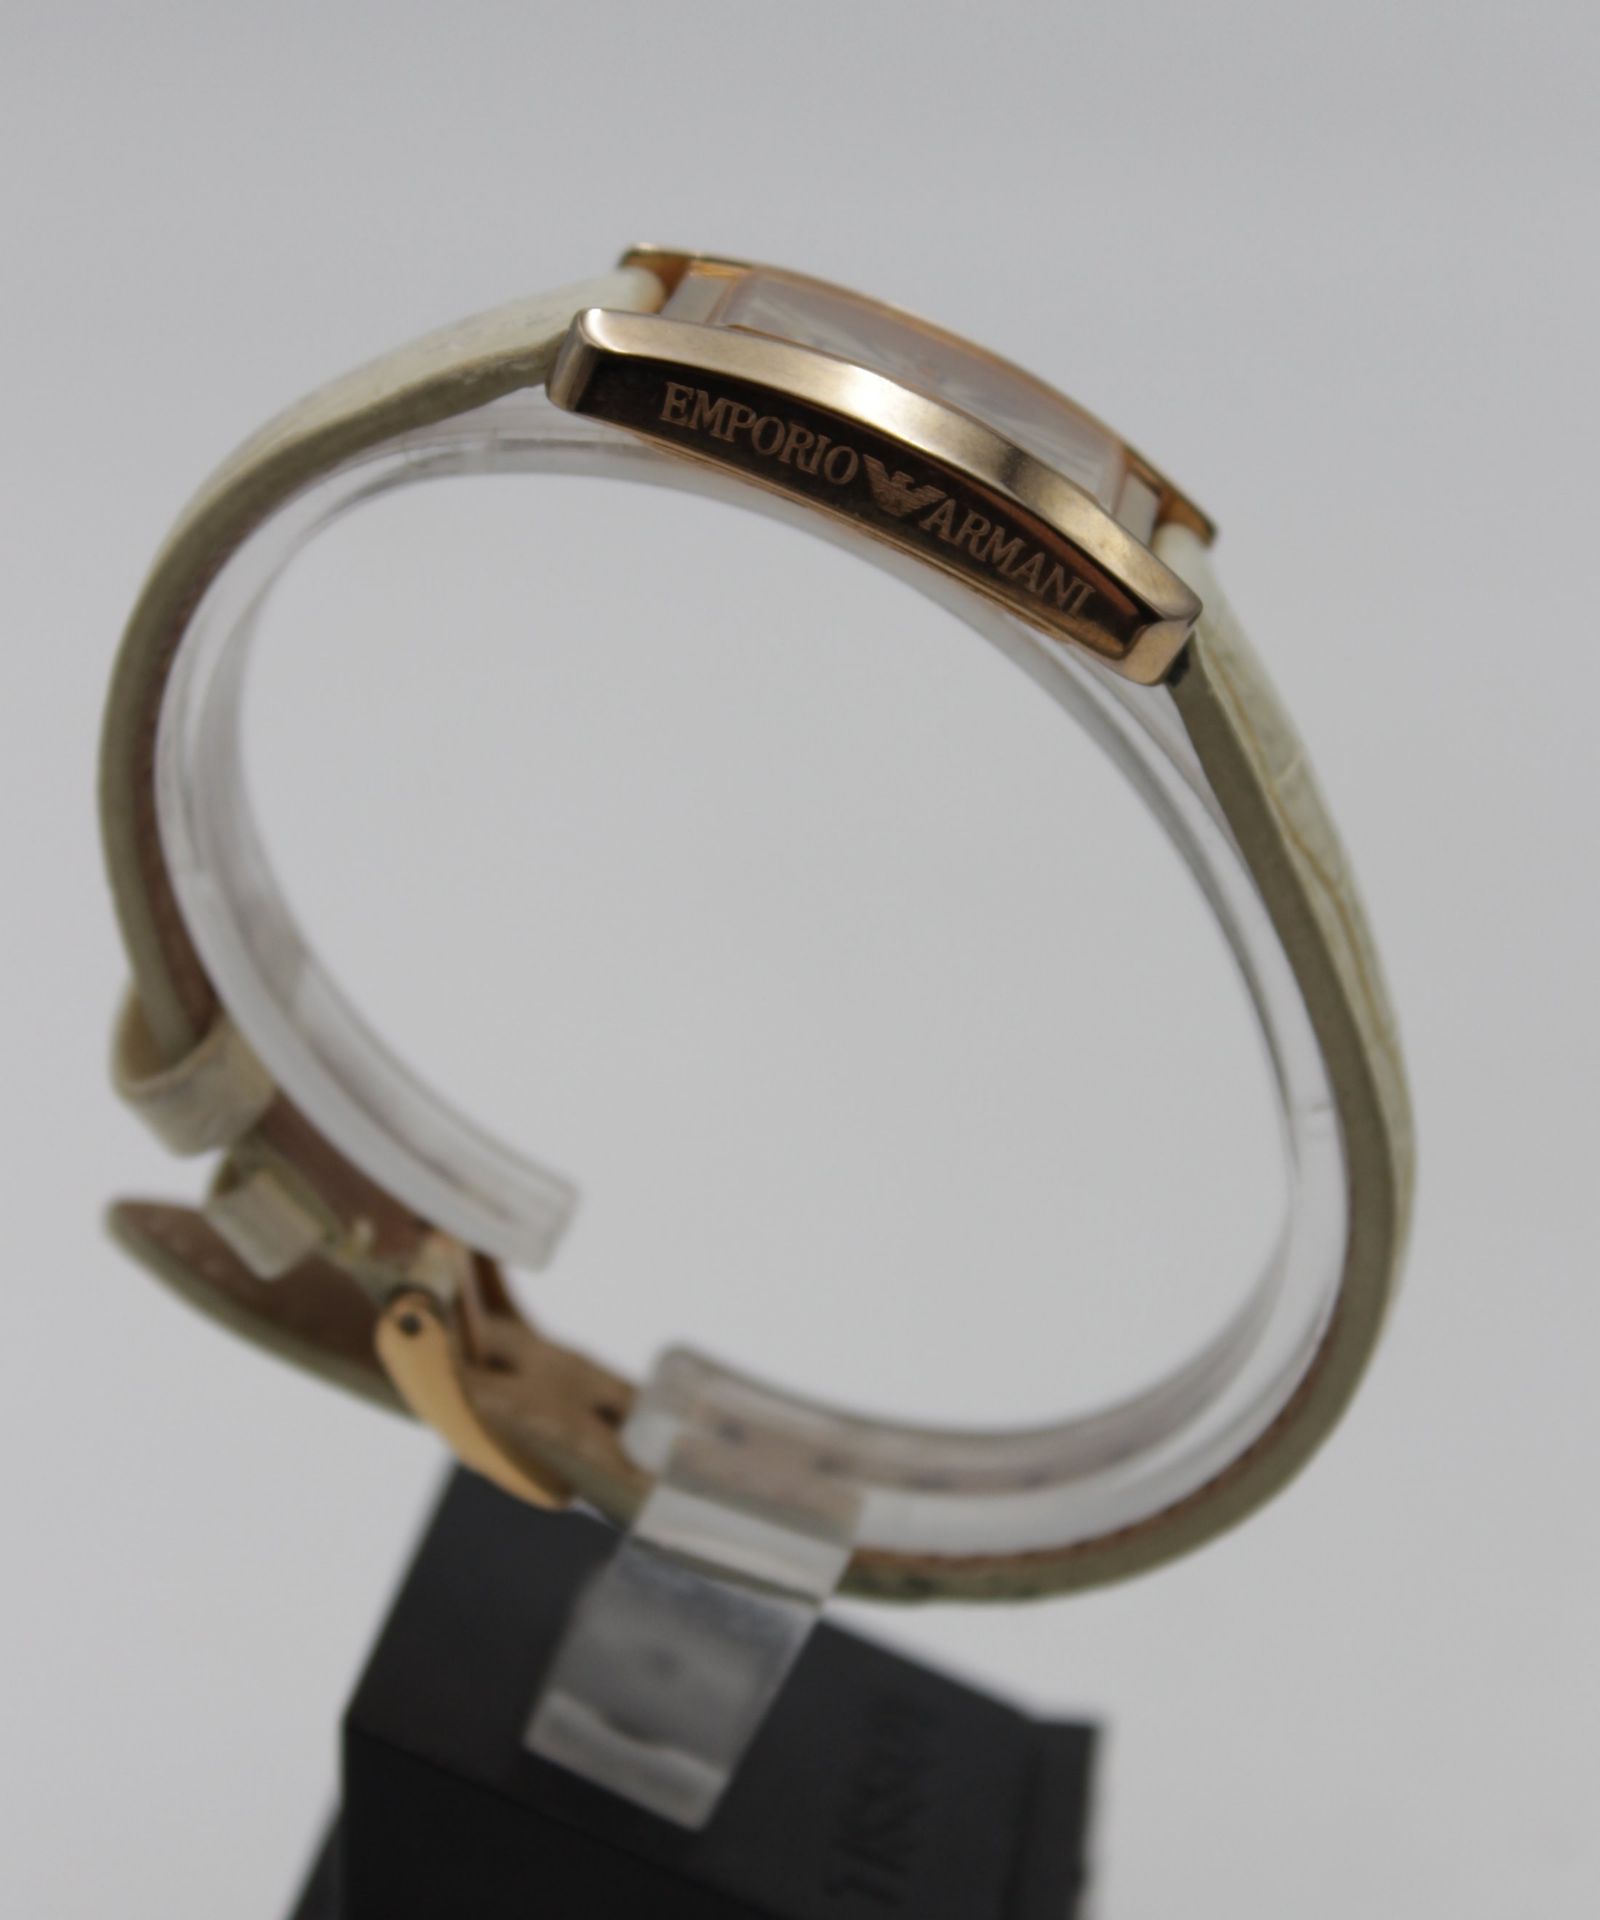 Damen-Armbanduhr, Emporio Armani, Quarz, Armband mit Tragespuren, anbei orig. Etui, ca. 2 x 3cm. - Bild 4 aus 6